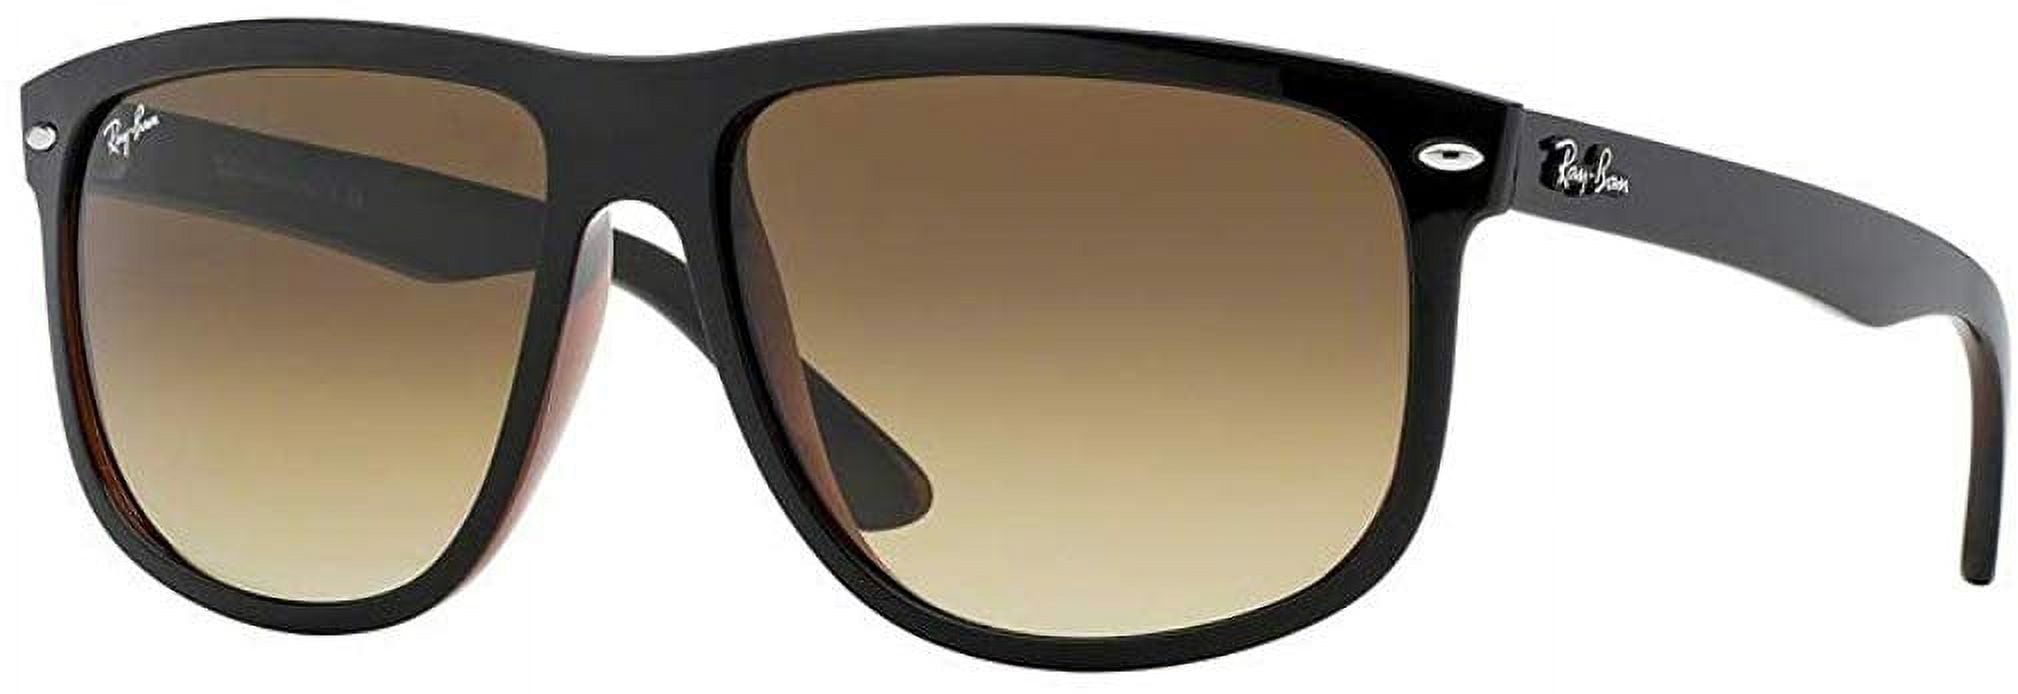 Wayfarer Sunglasses - Black